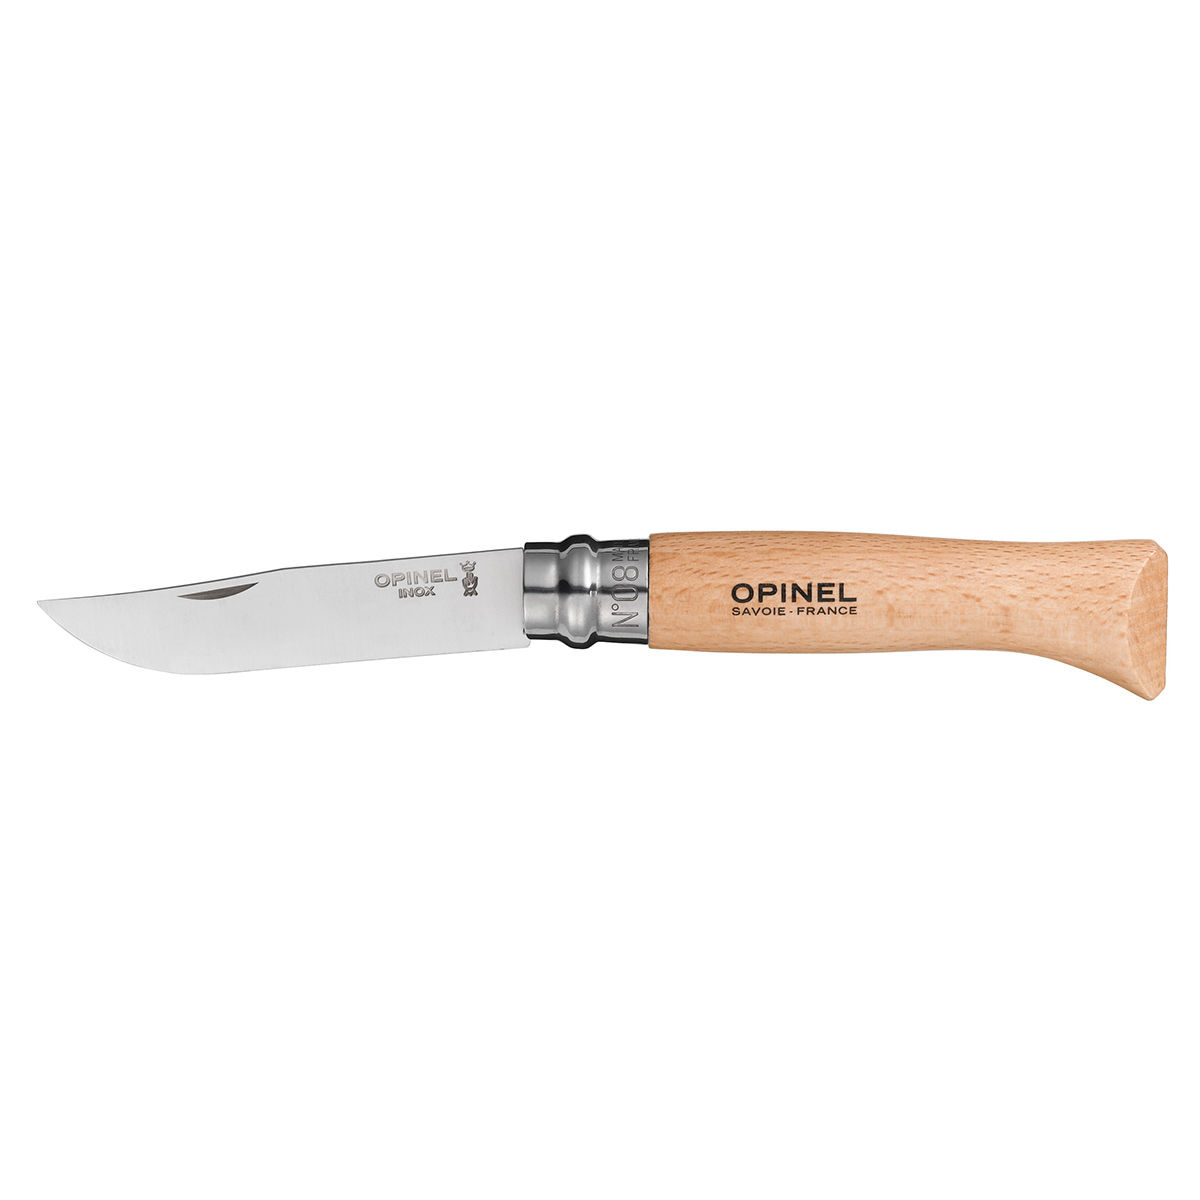 Opinel knife n°8 - Tradition 8,5 cm - Stainless steel, beechwood